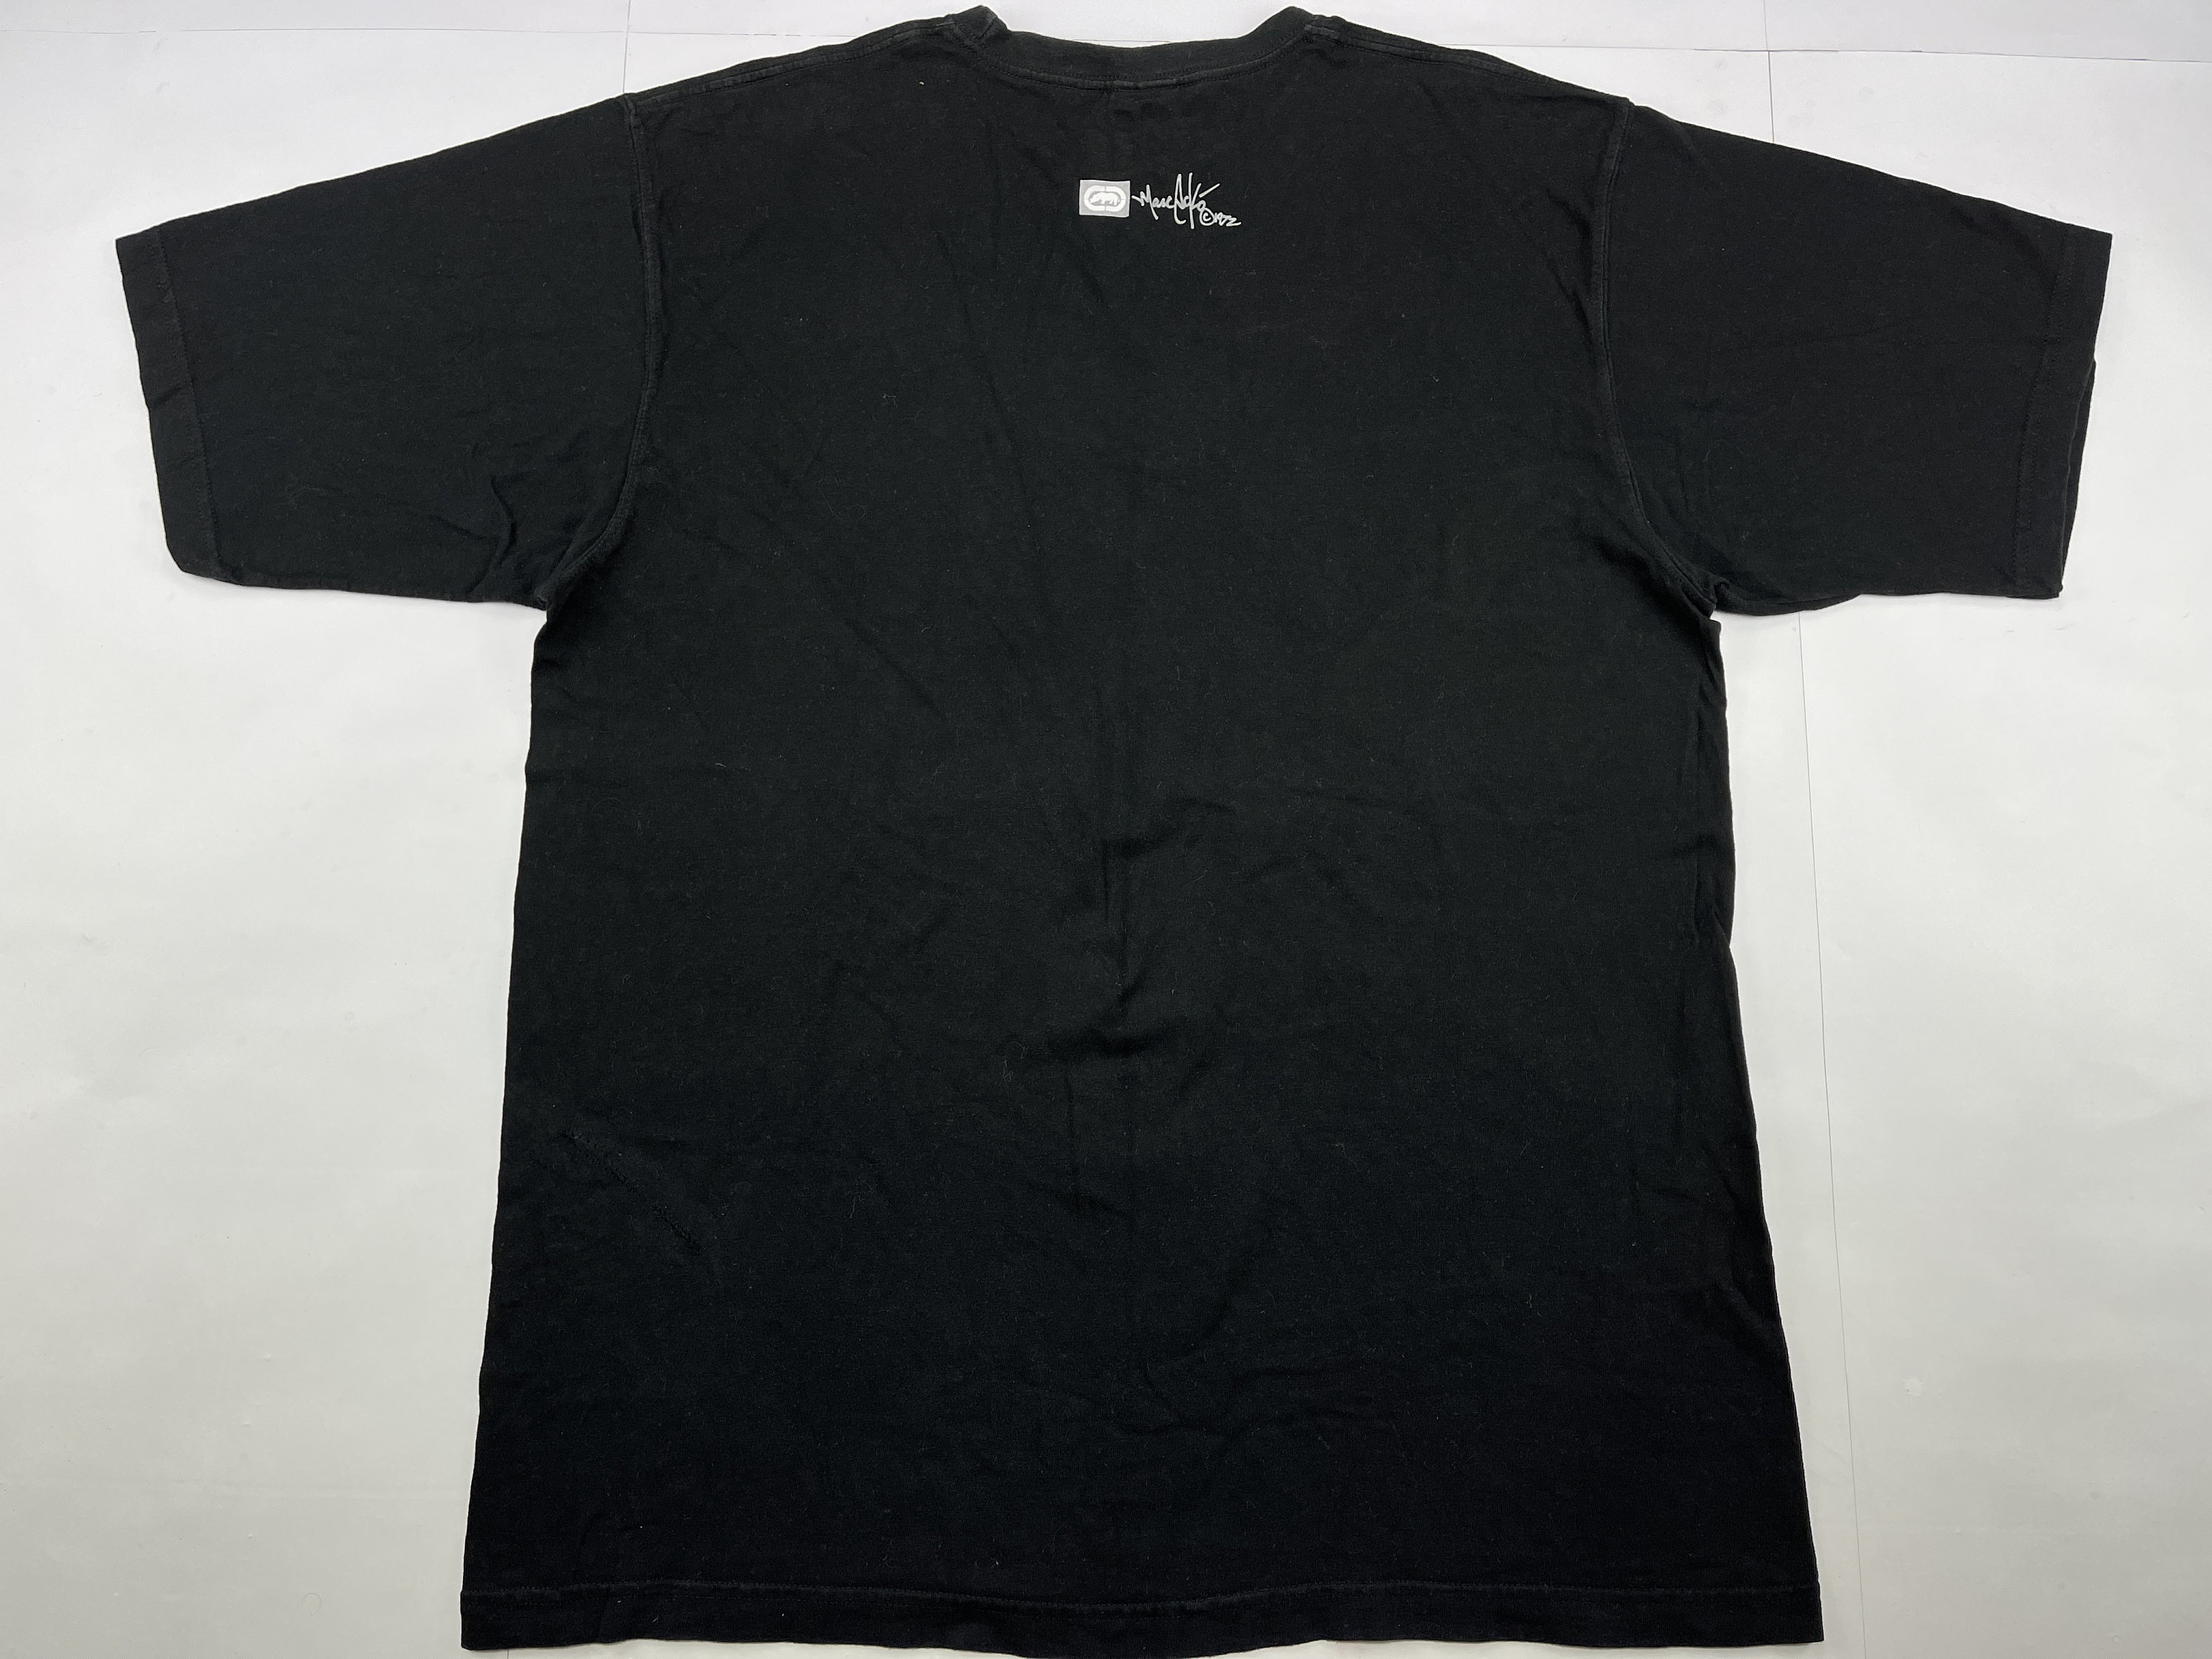 ECKO UNLTD t-shirt black vintage shirt 90s hip hop | Etsy